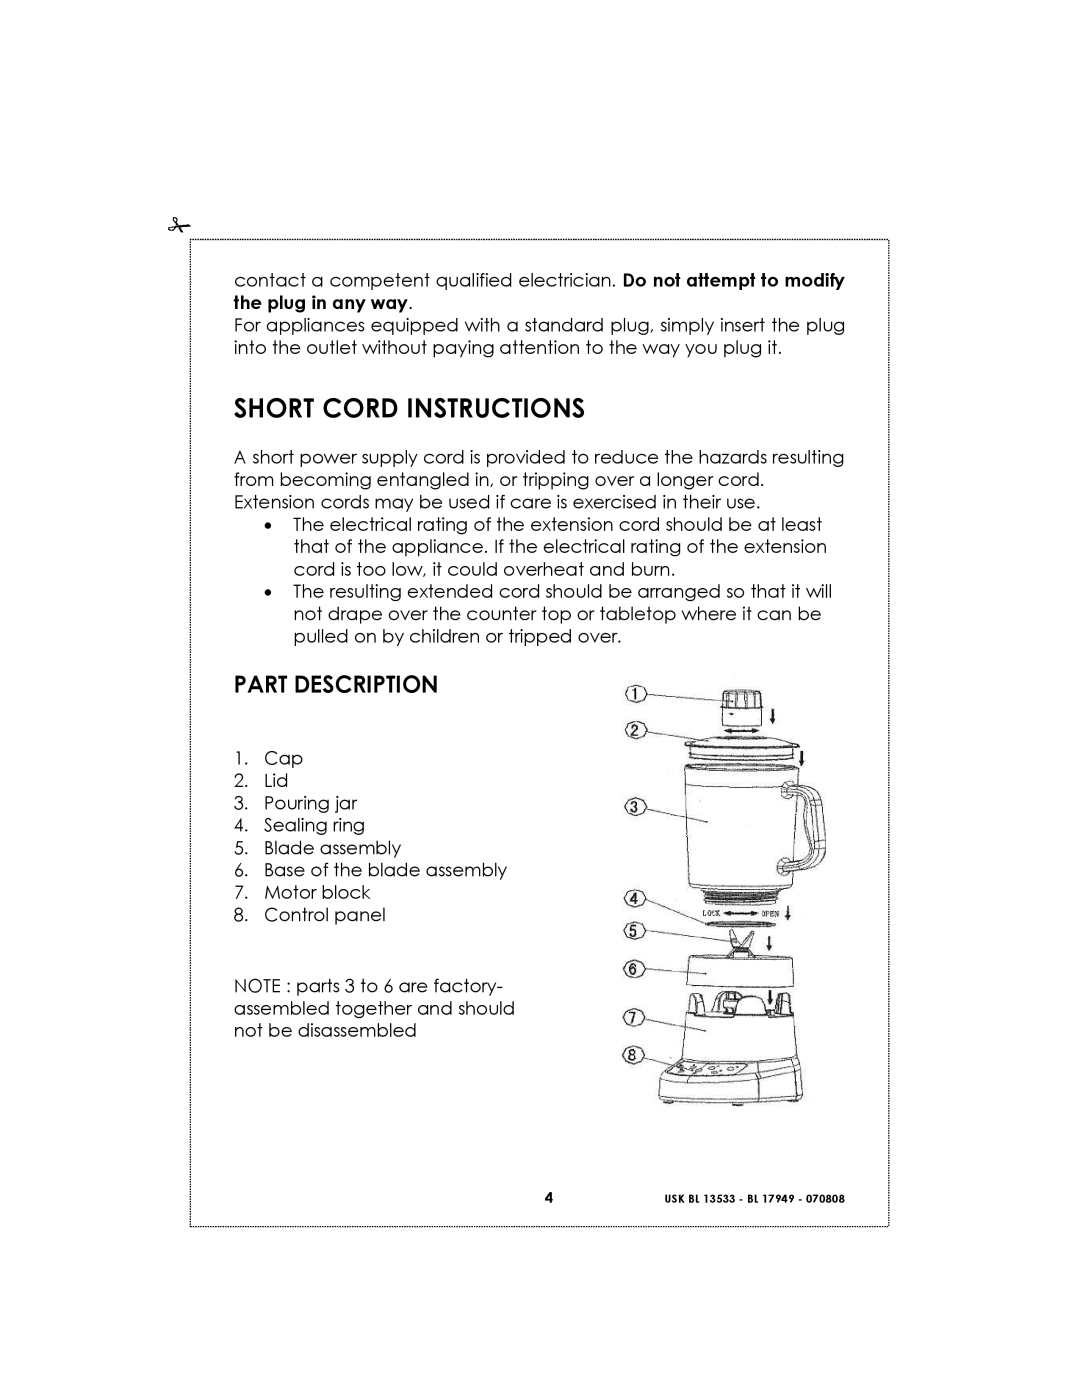 Kalorik USK BL 17949 BL 1, USK BL 13533 BL 6 manual Short Cord Instructions, Part Description 